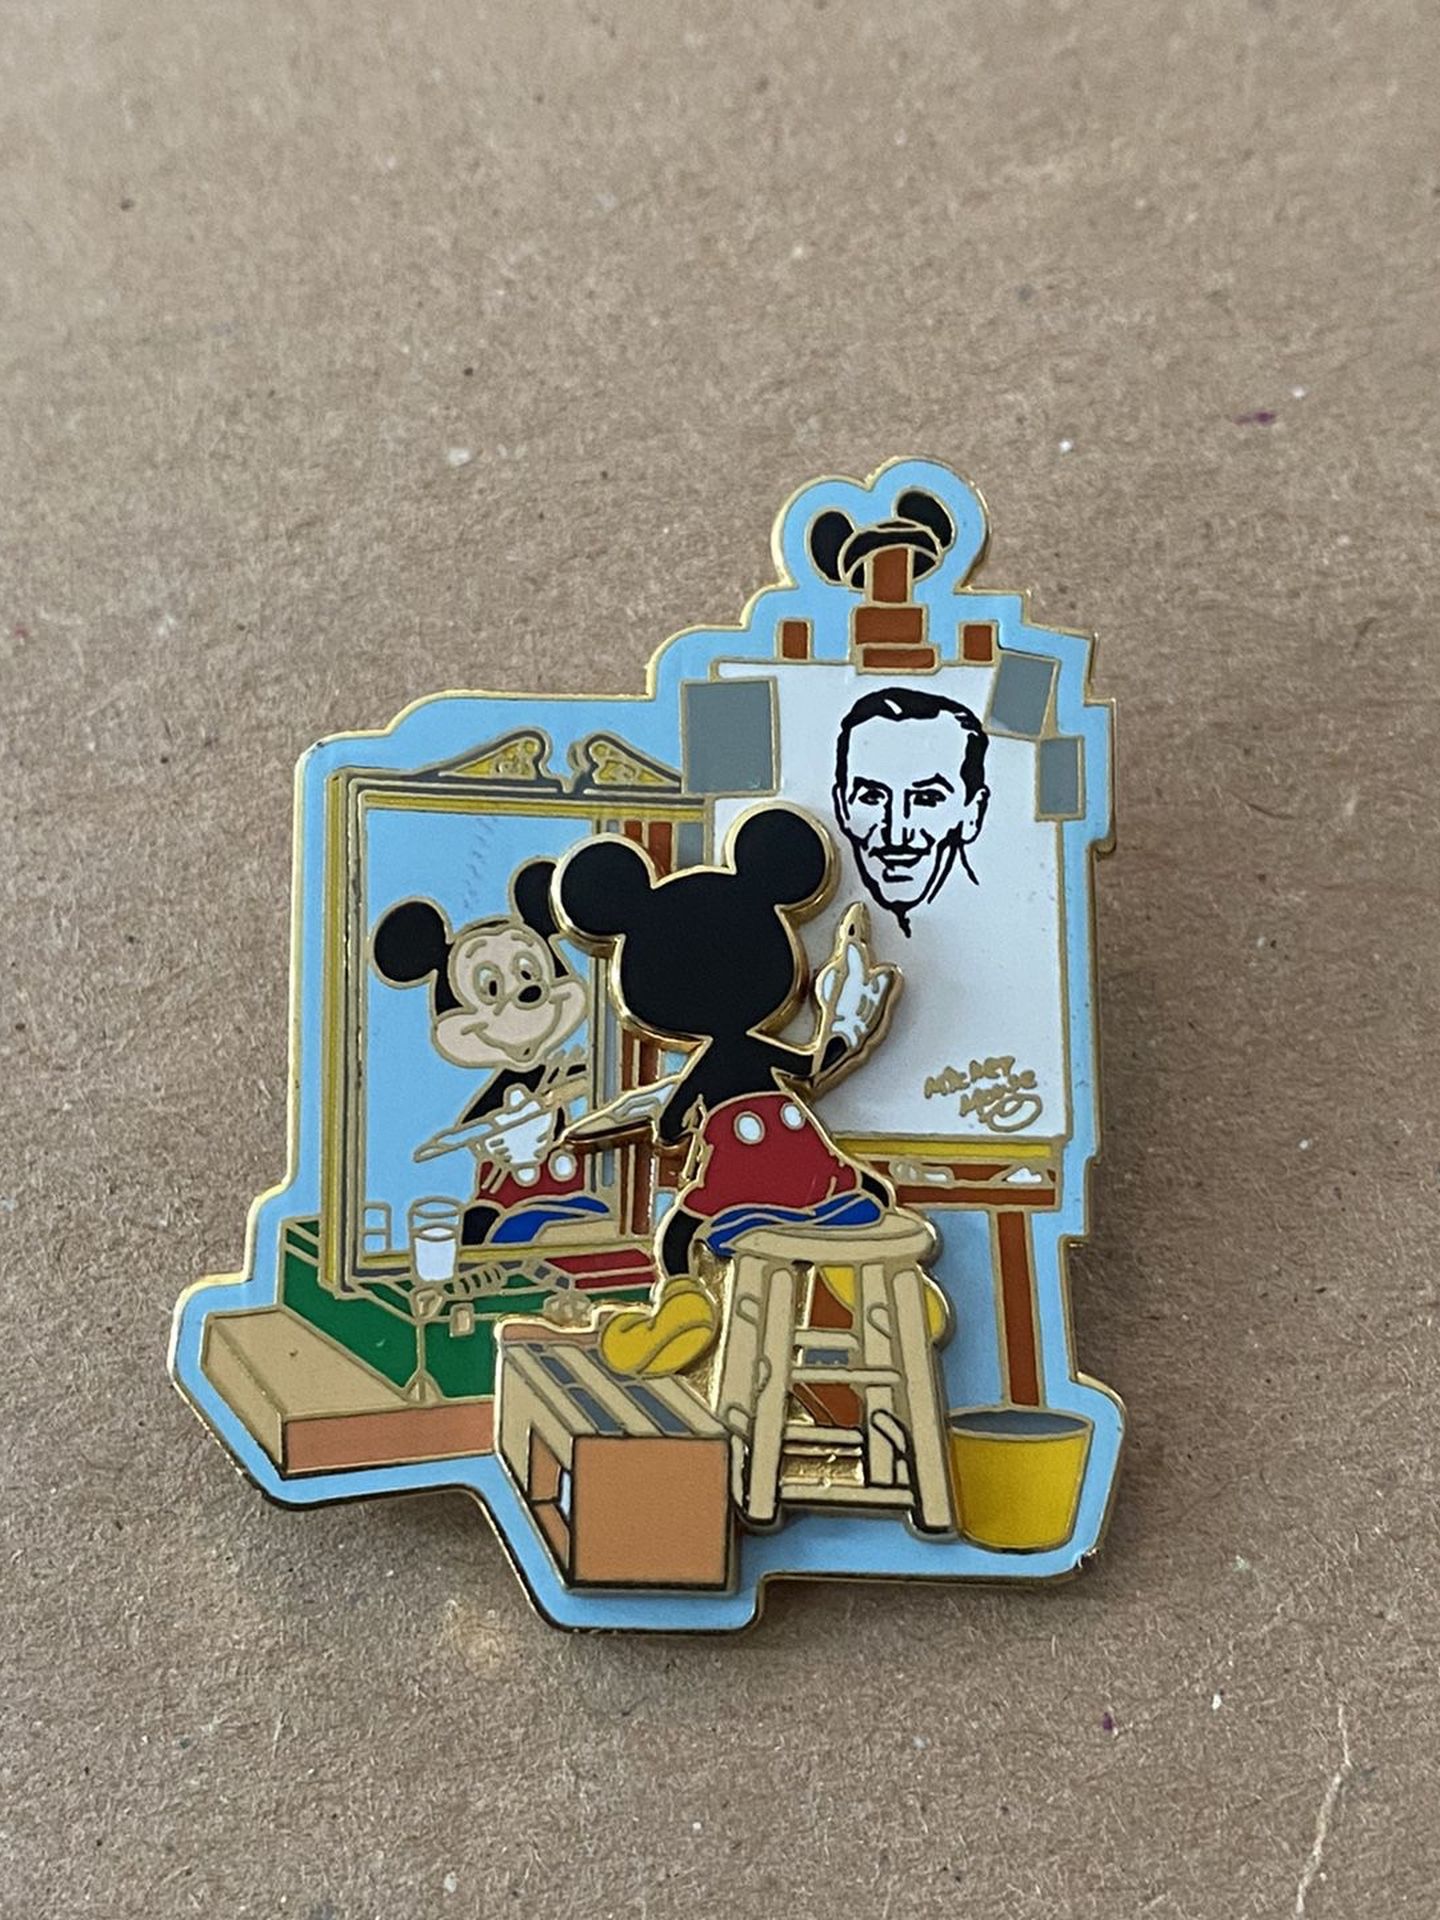 Disney Pin #6318 - "Norman Rockwell Spoof"